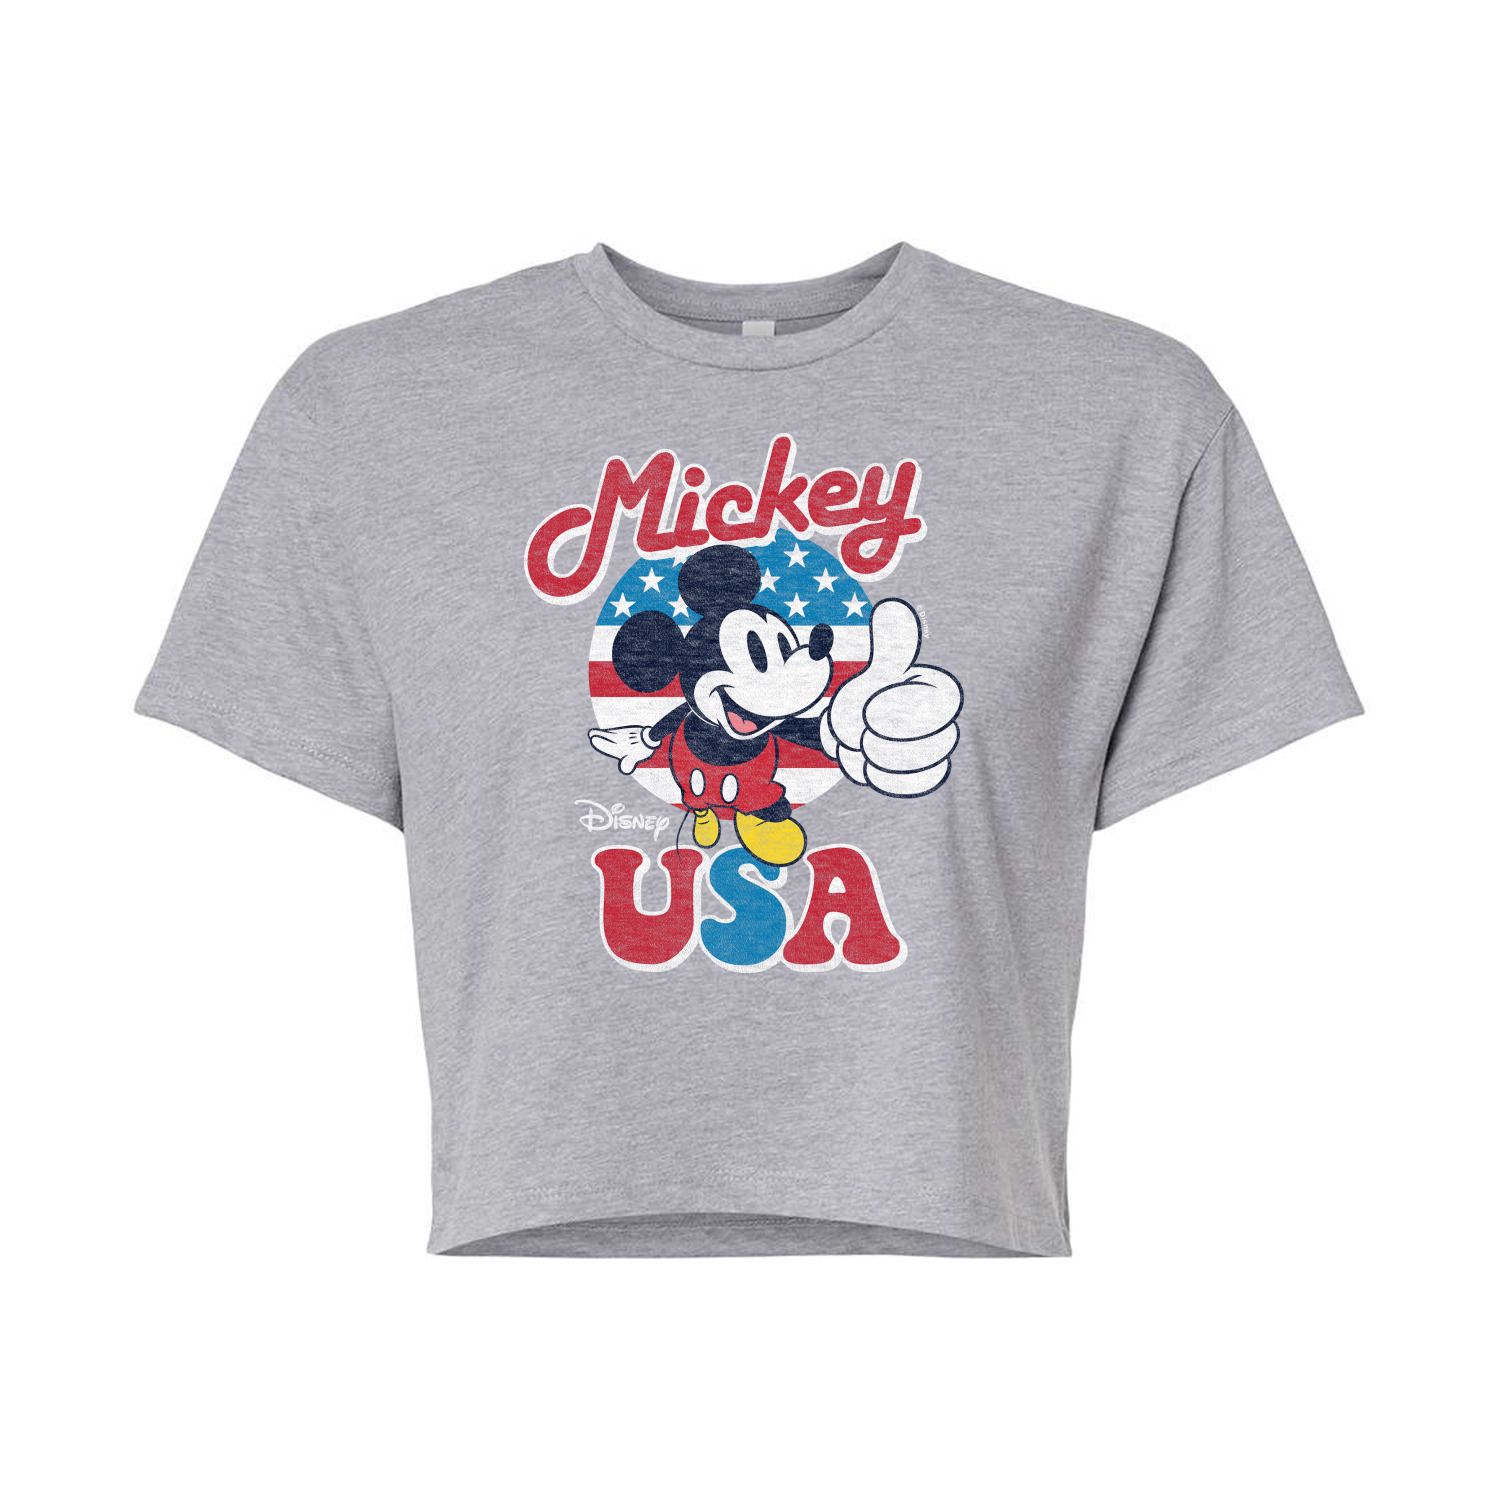 Укороченная футболка Disney's Mickey Mouse Juniors USA Disney